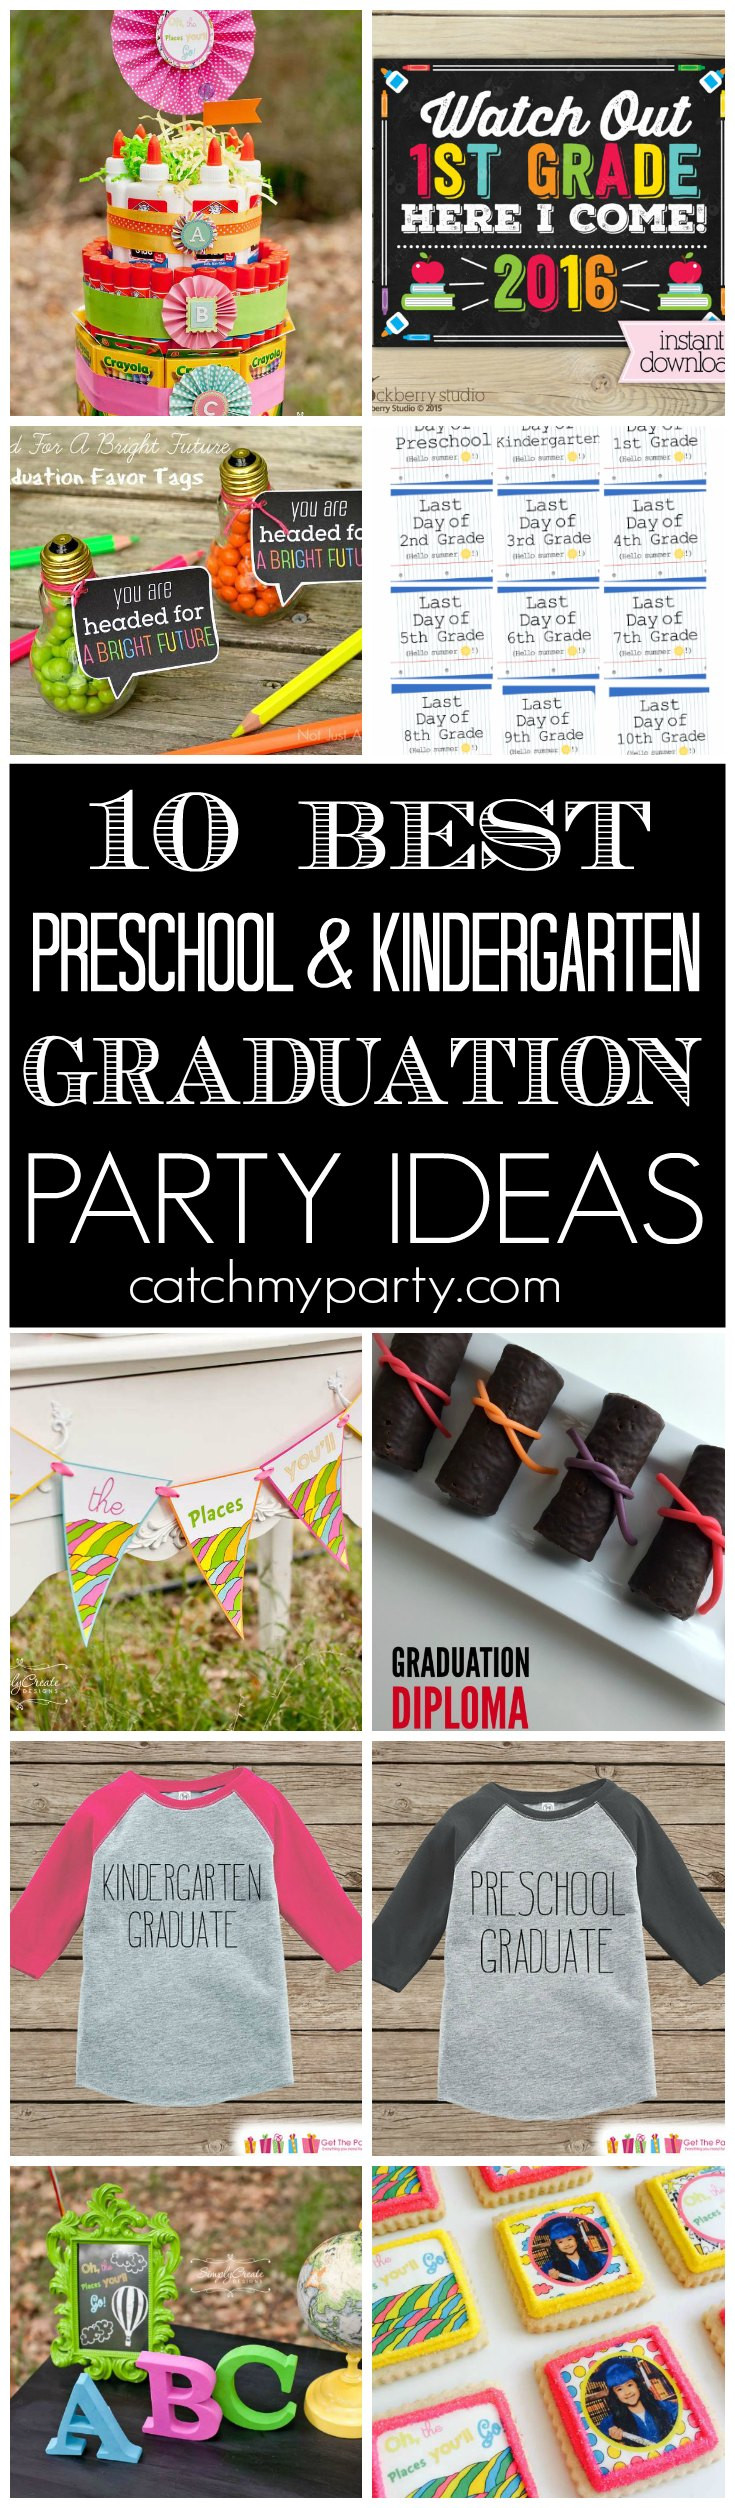 Pre Kindergarten Graduation Party Ideas
 10 Best Preschool & Kindergarten Graduation Party Ideas